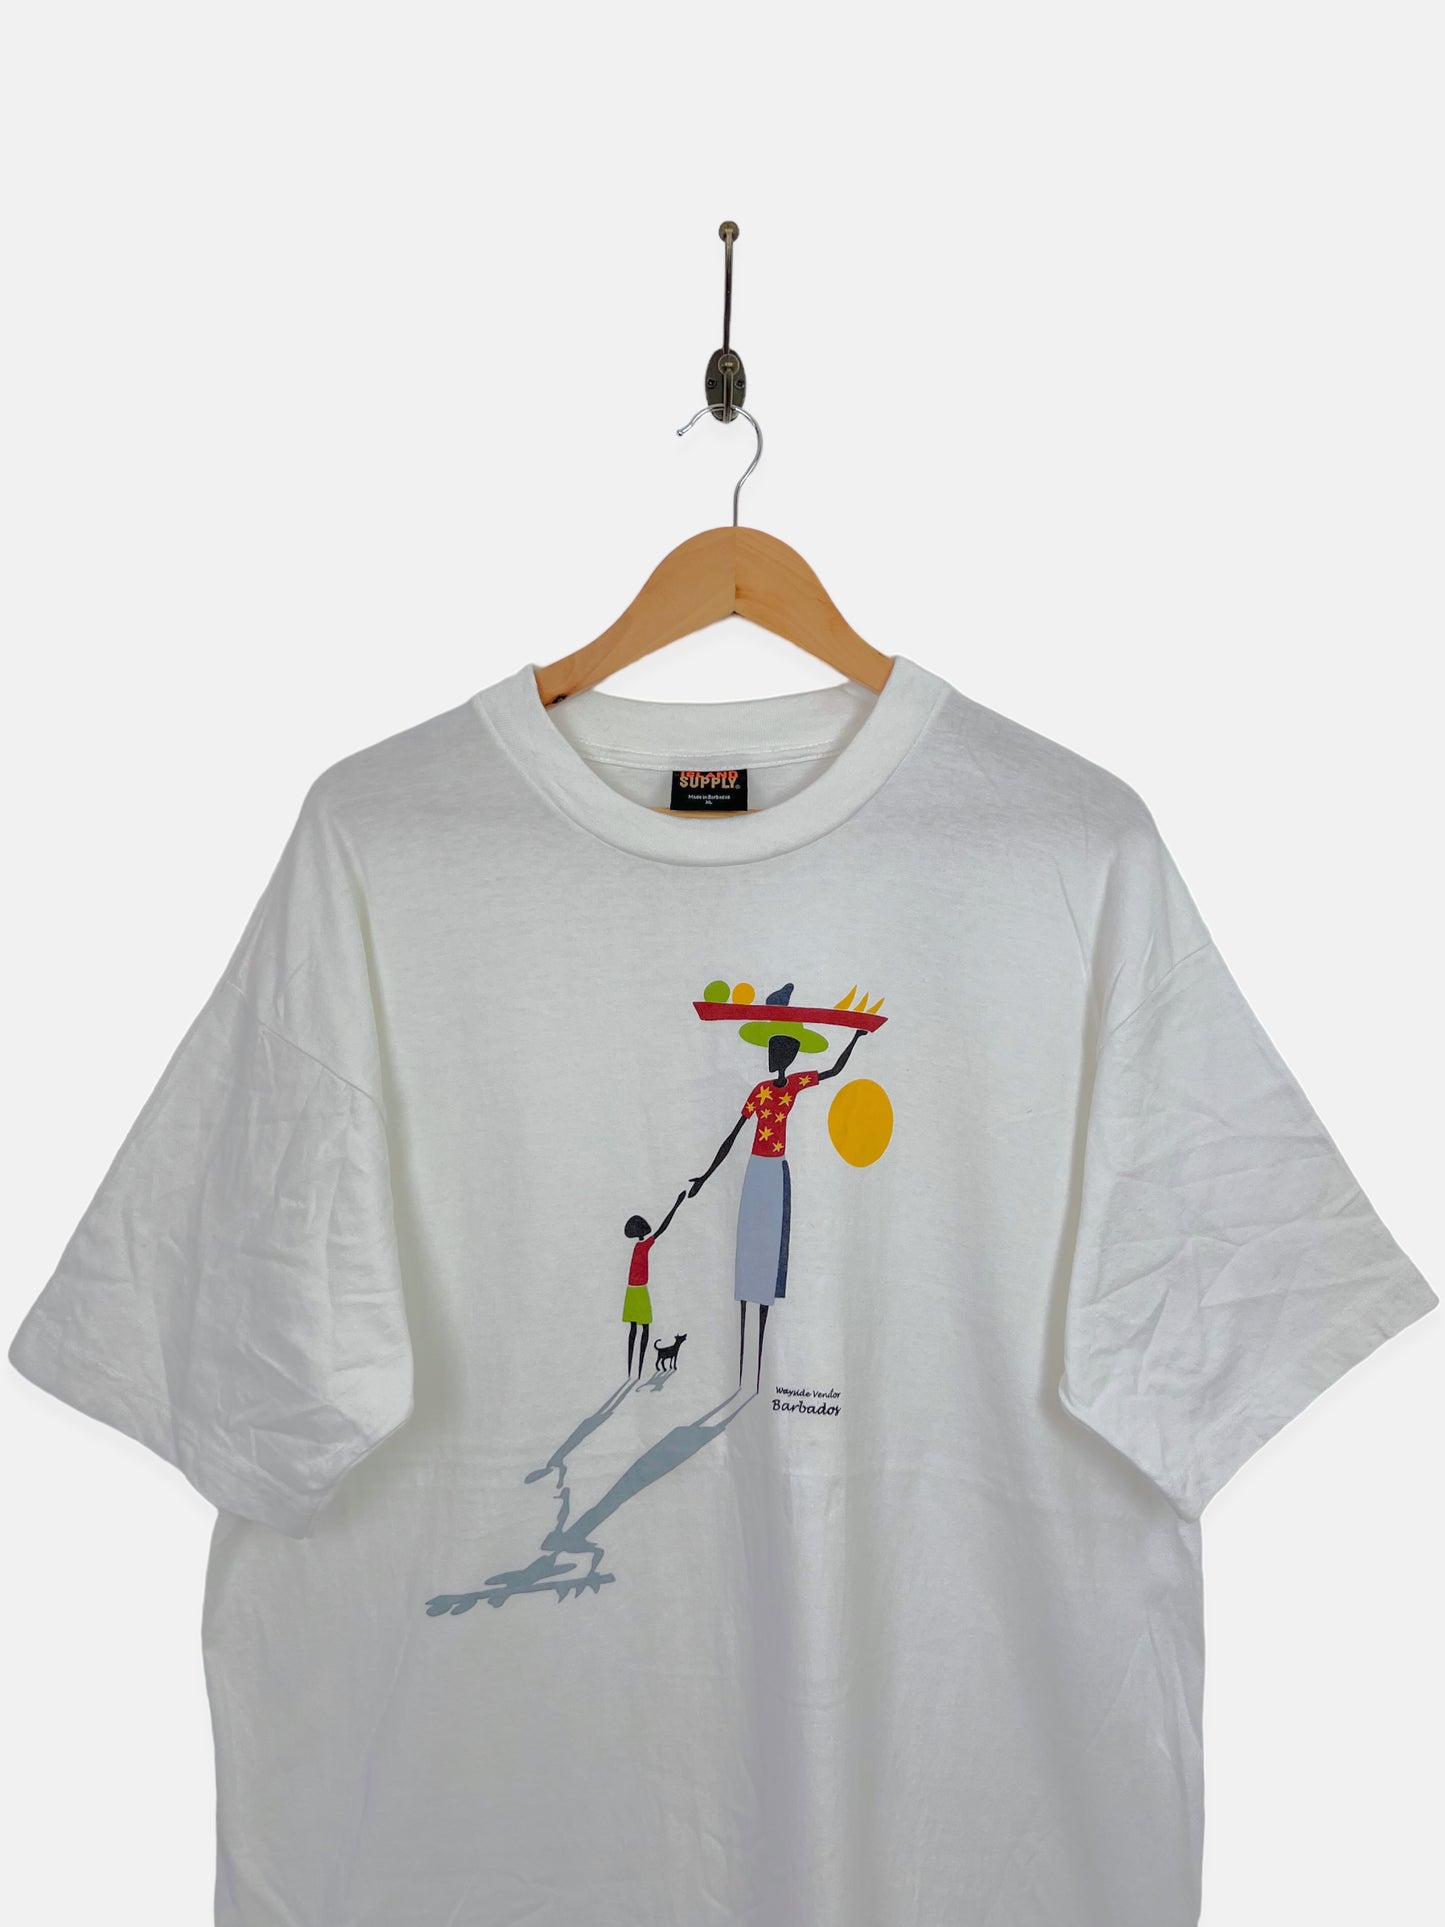 90's Wayside Vendor Barbados Vintage T-Shirt Size XL